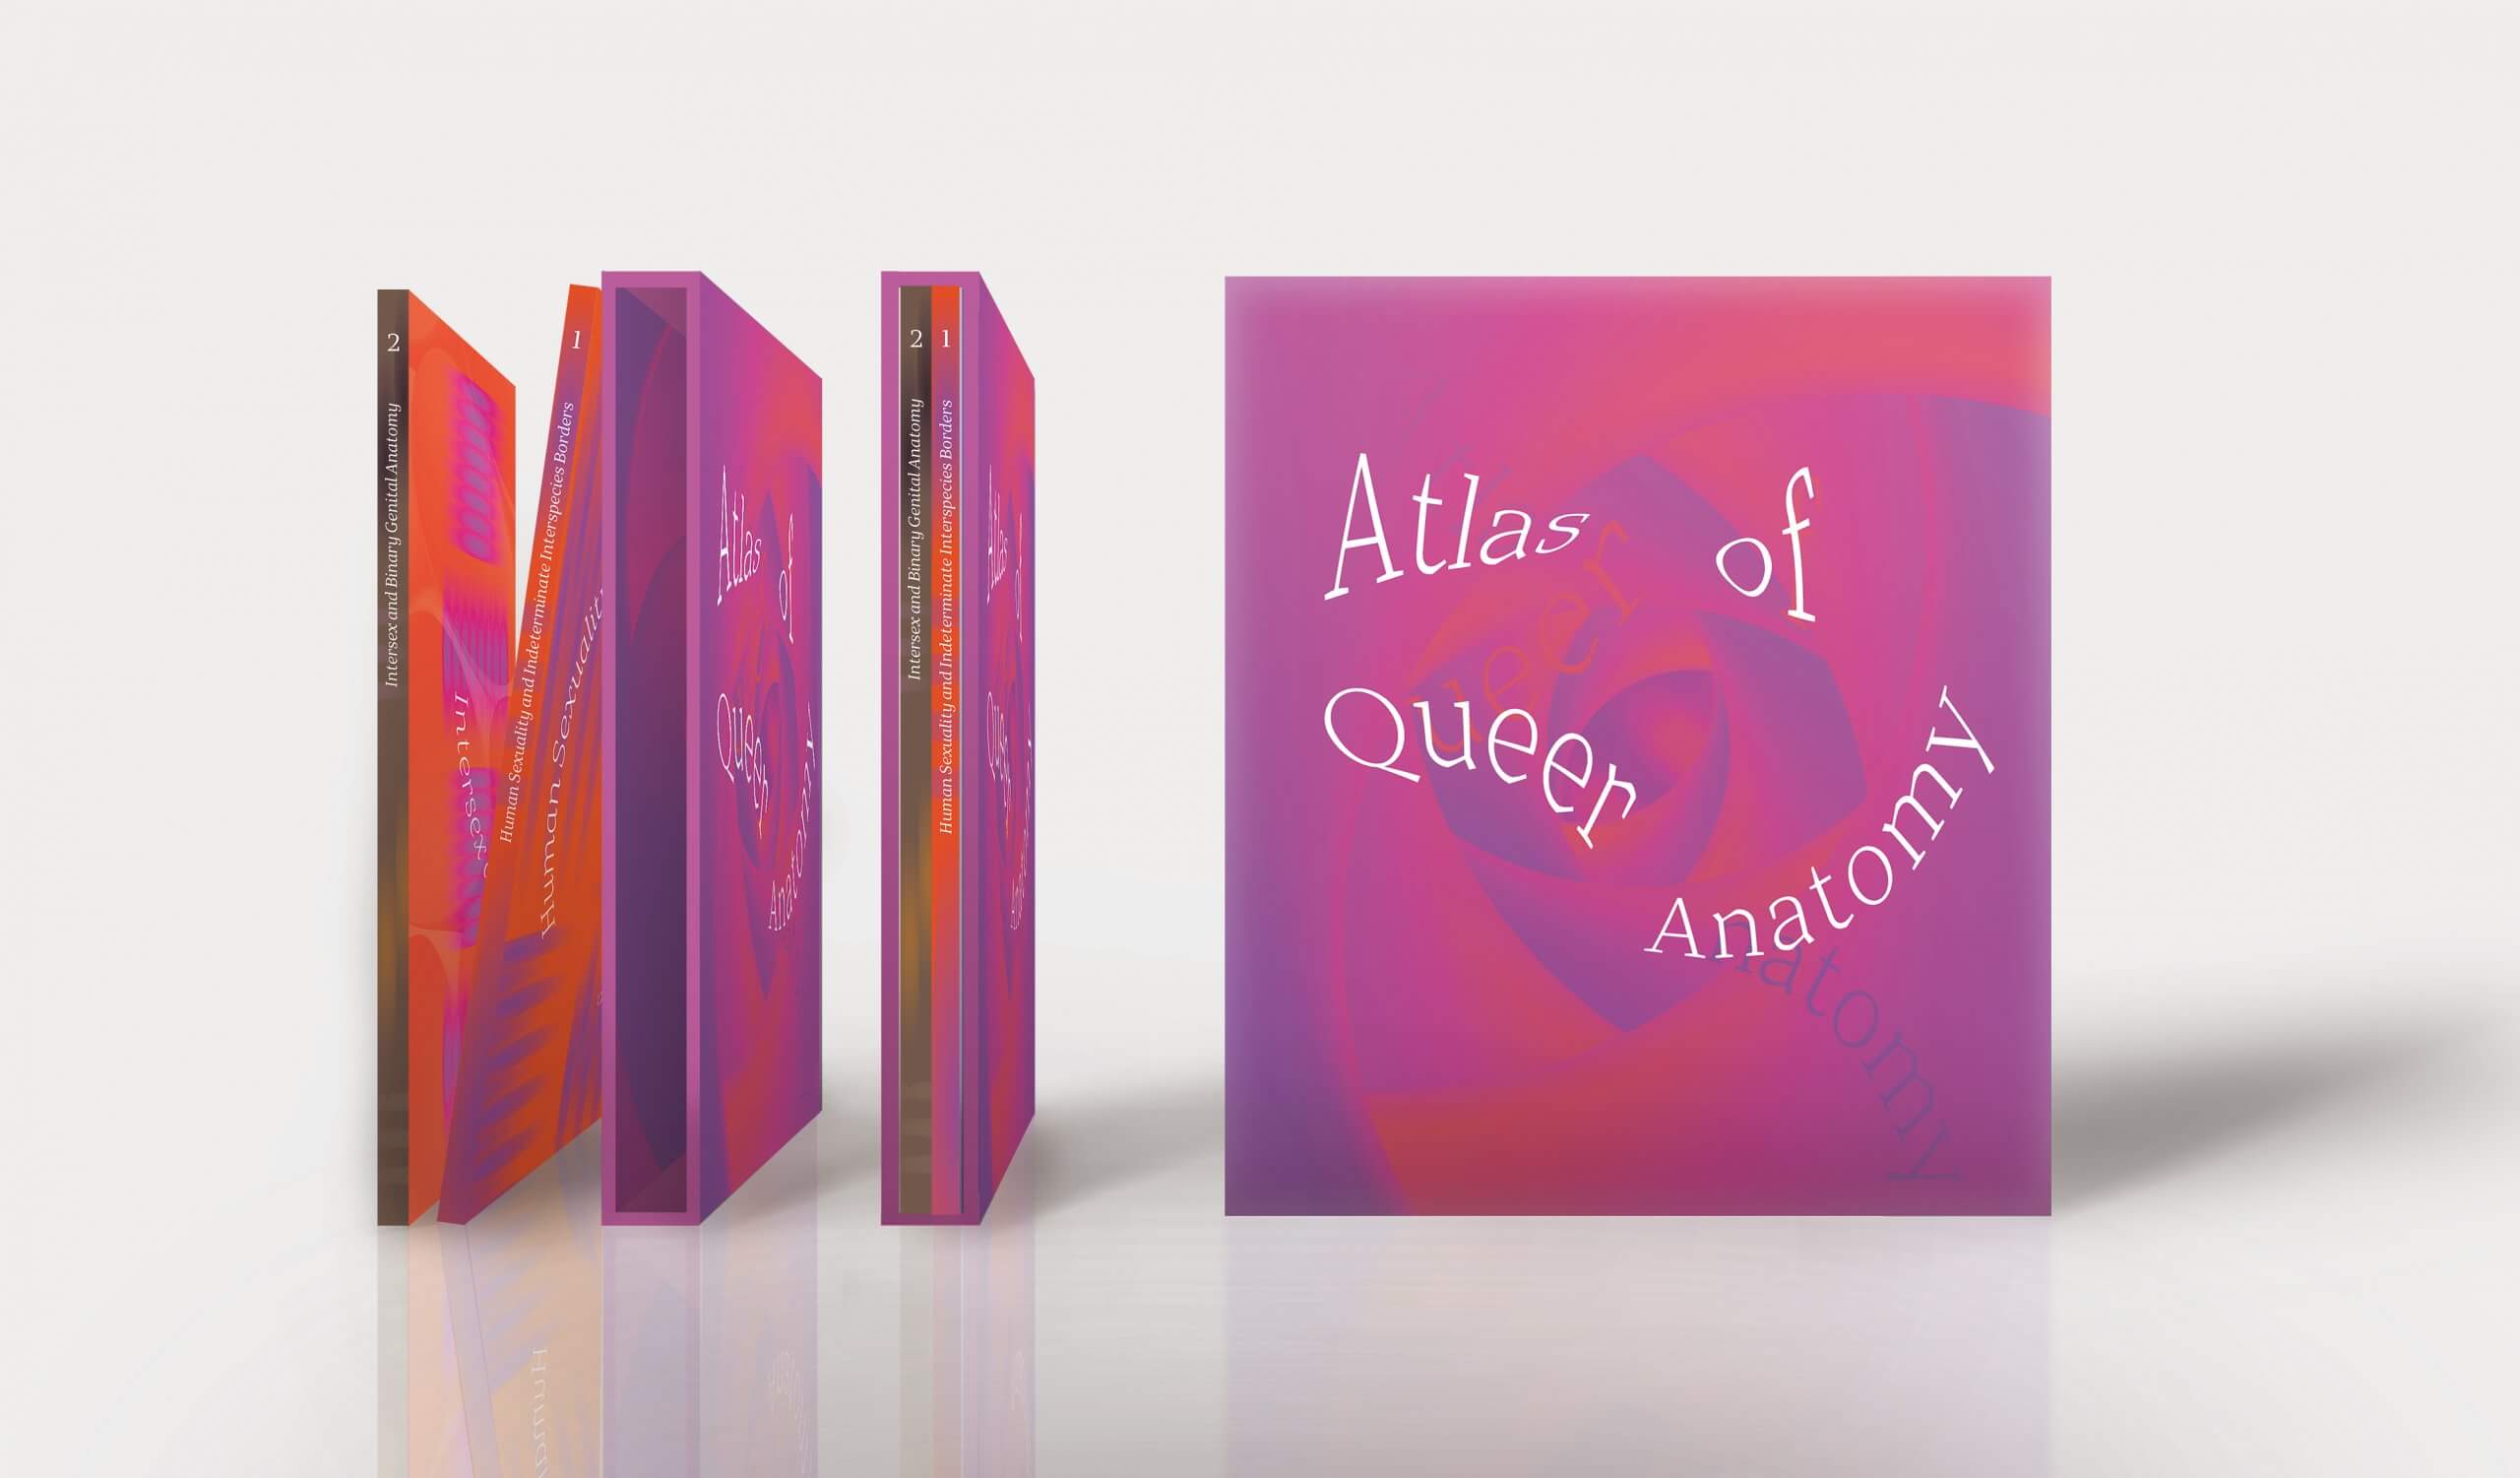 Kuang-Yi Ku’s work Atlas of Queer Anatomy nominated for Dutch Design Award